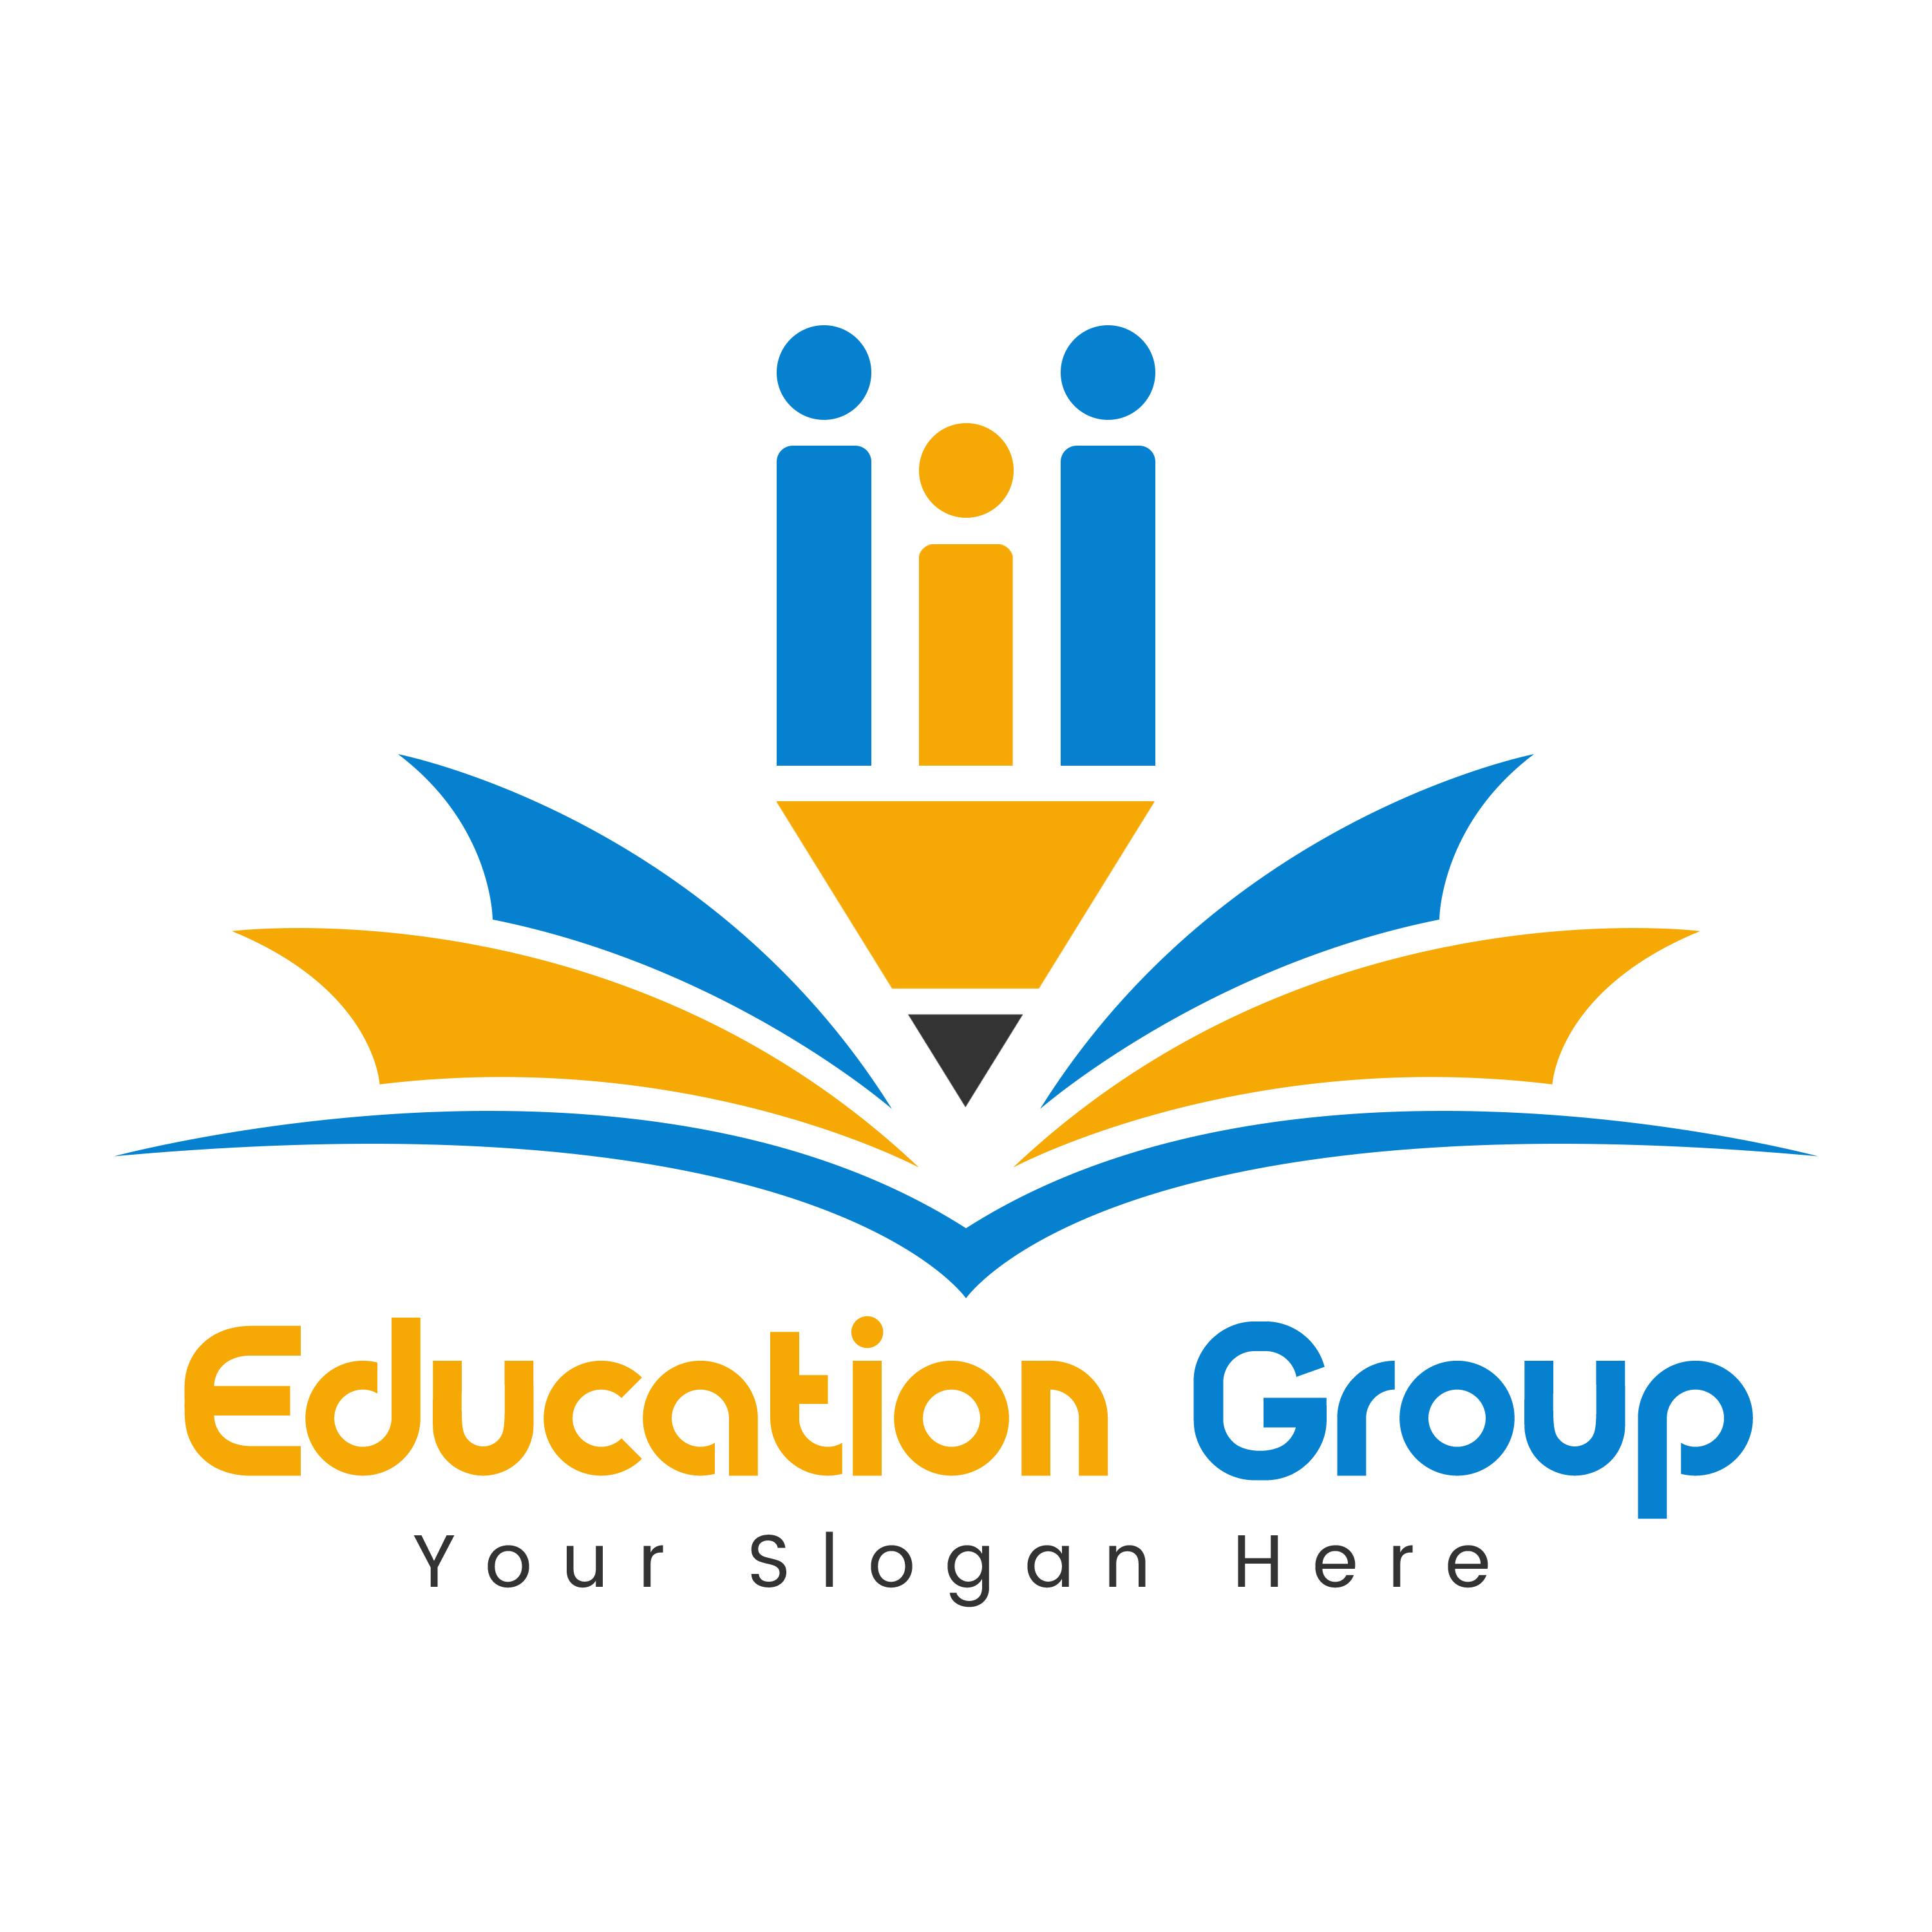 Education Group Logo Design PNG Transparent